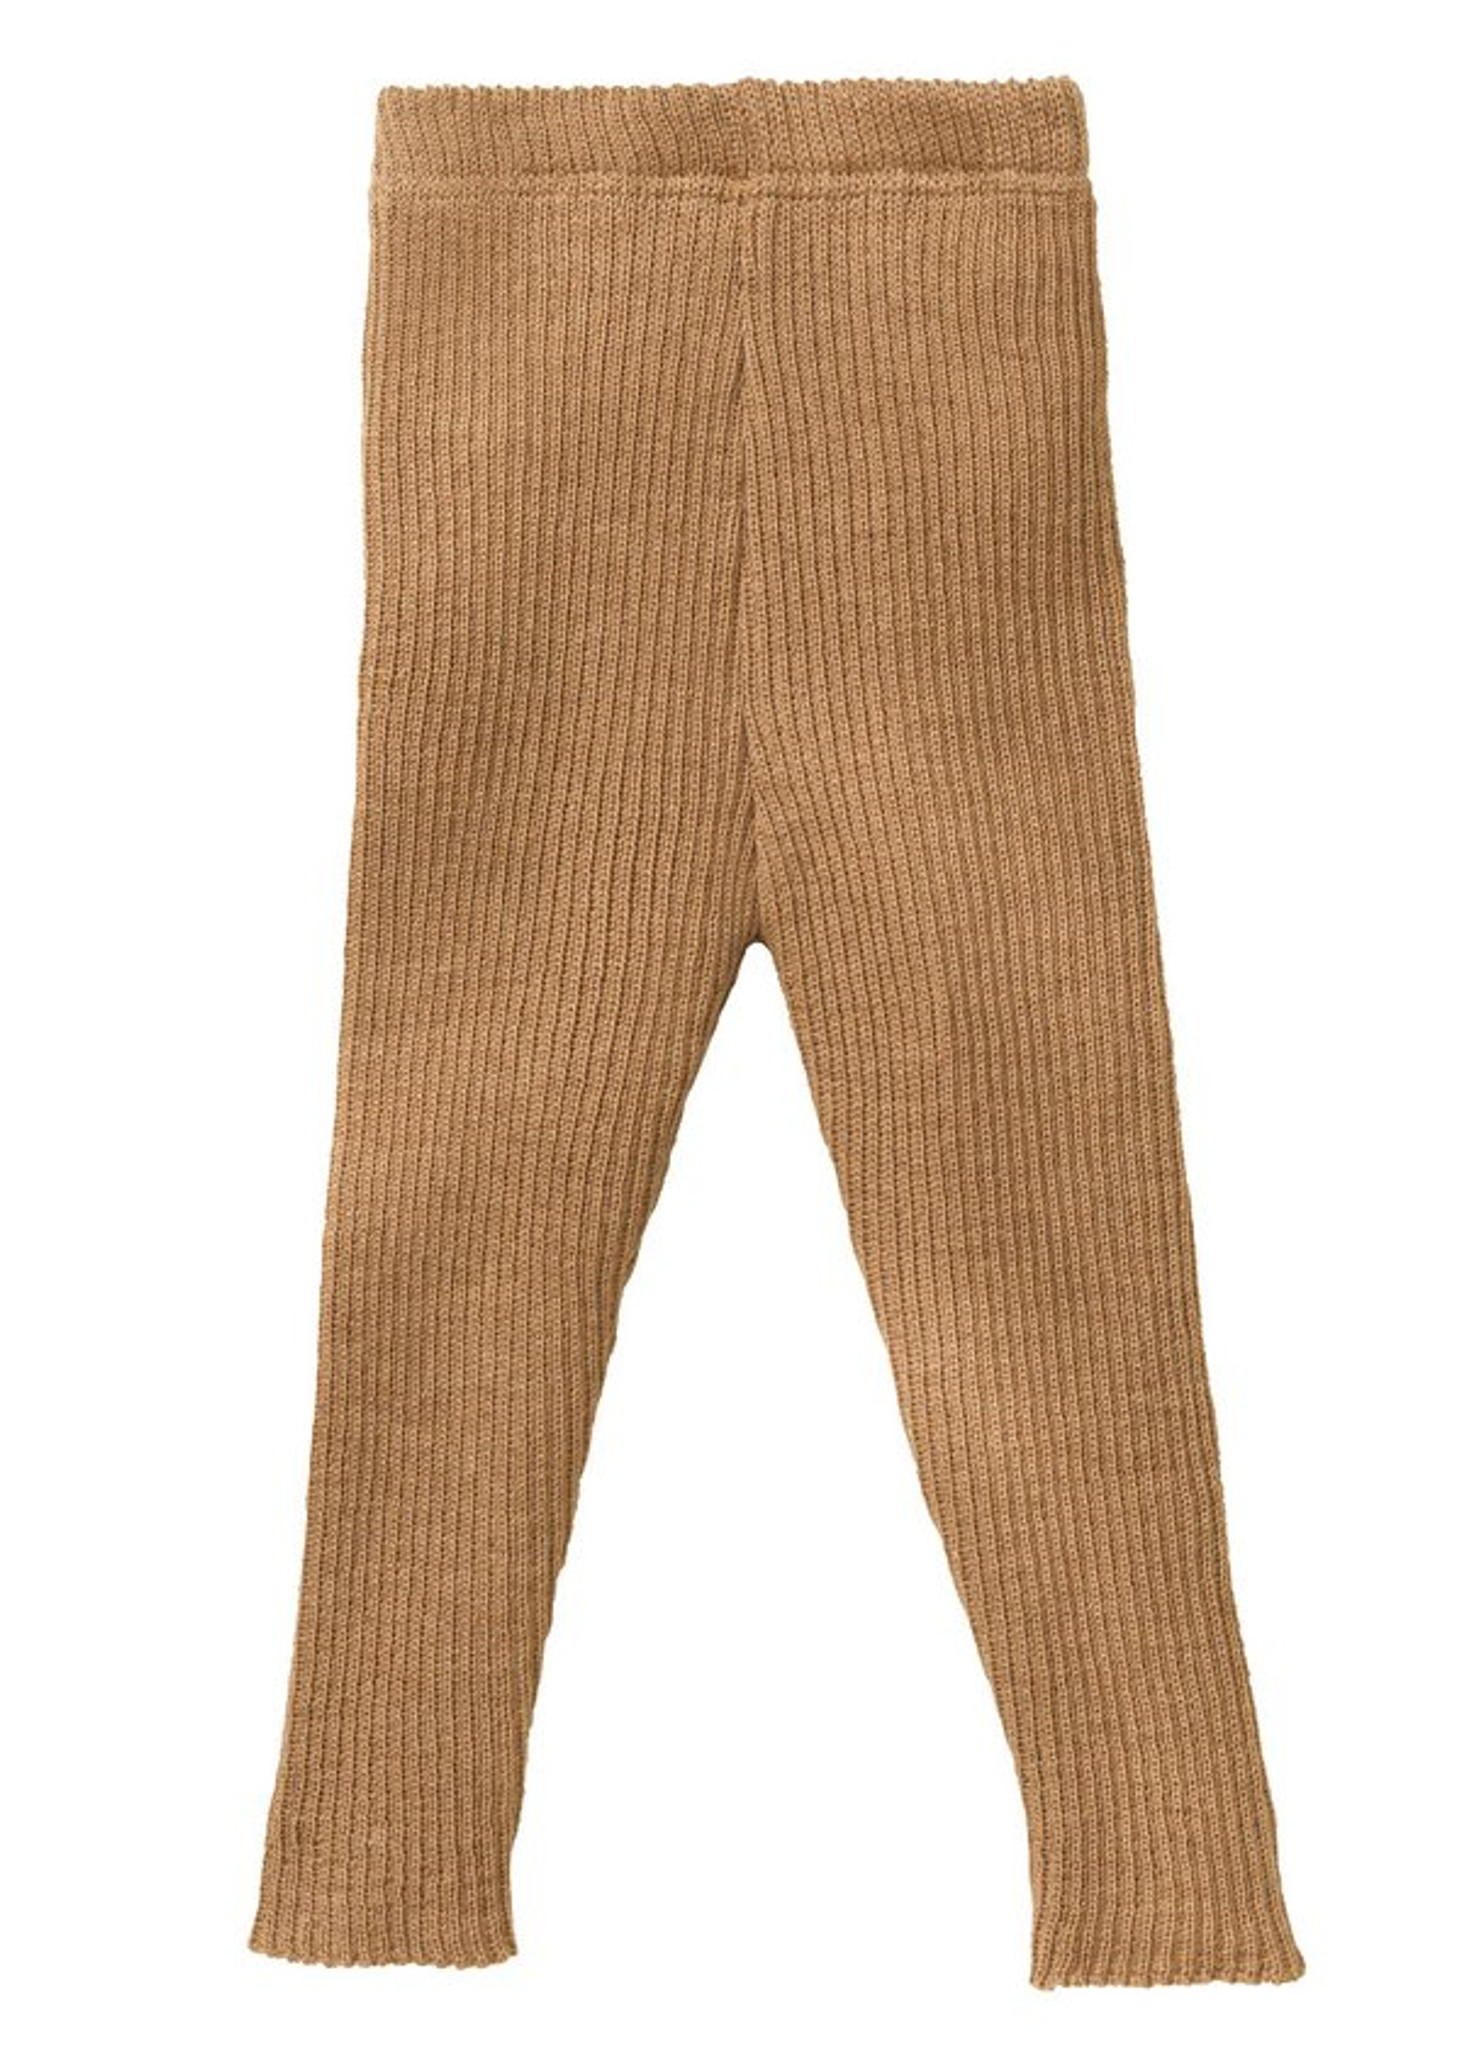 Stretchy, Striped, Alpaca or Organic Merino Wool, Knit Leggings, Tights,  Pants 